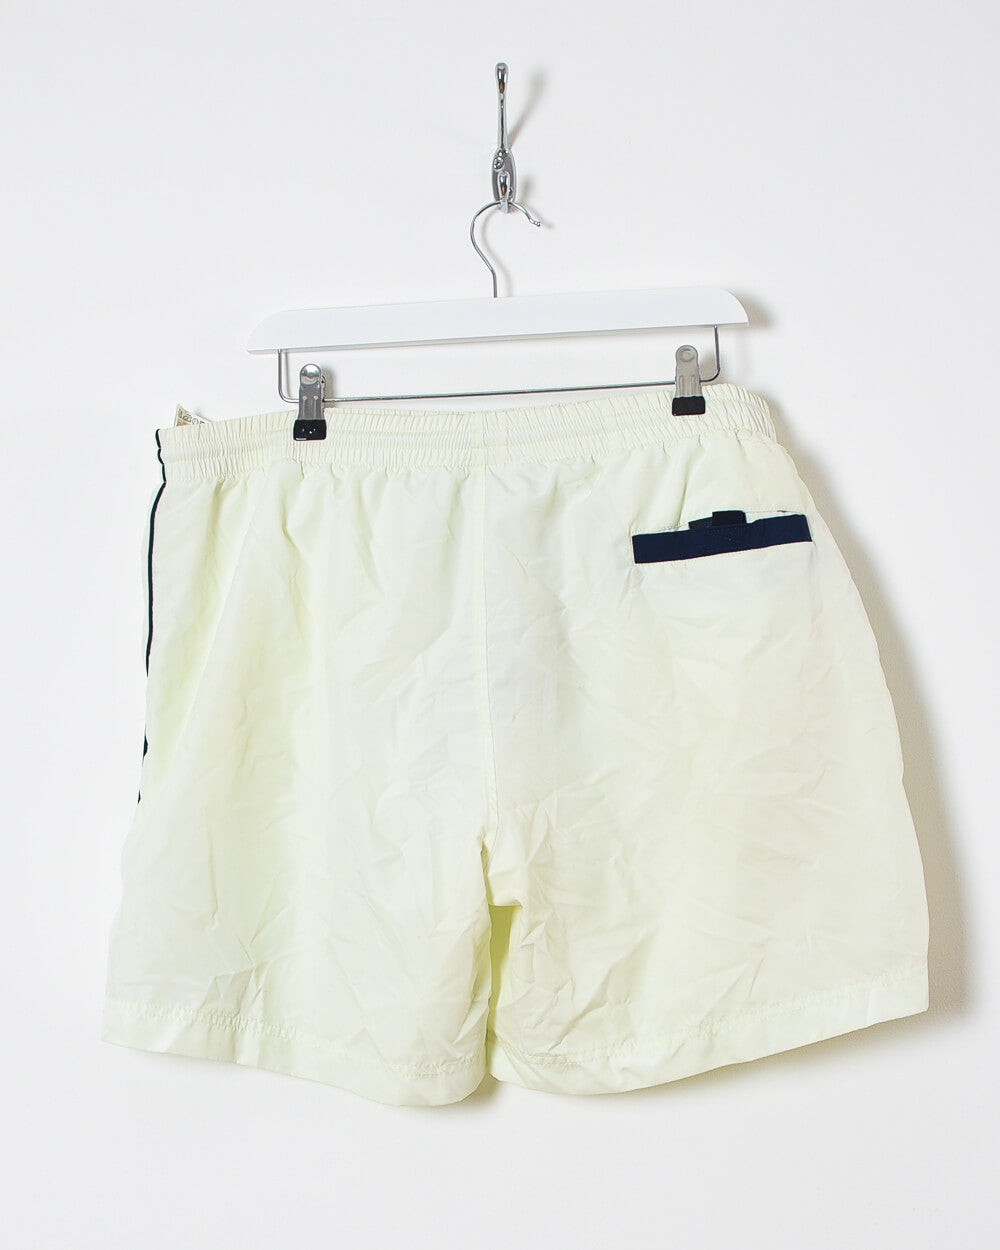 Kappa Swimwear Shorts - W36 - Domno Vintage 90s, 80s, 00s Retro and Vintage Clothing 